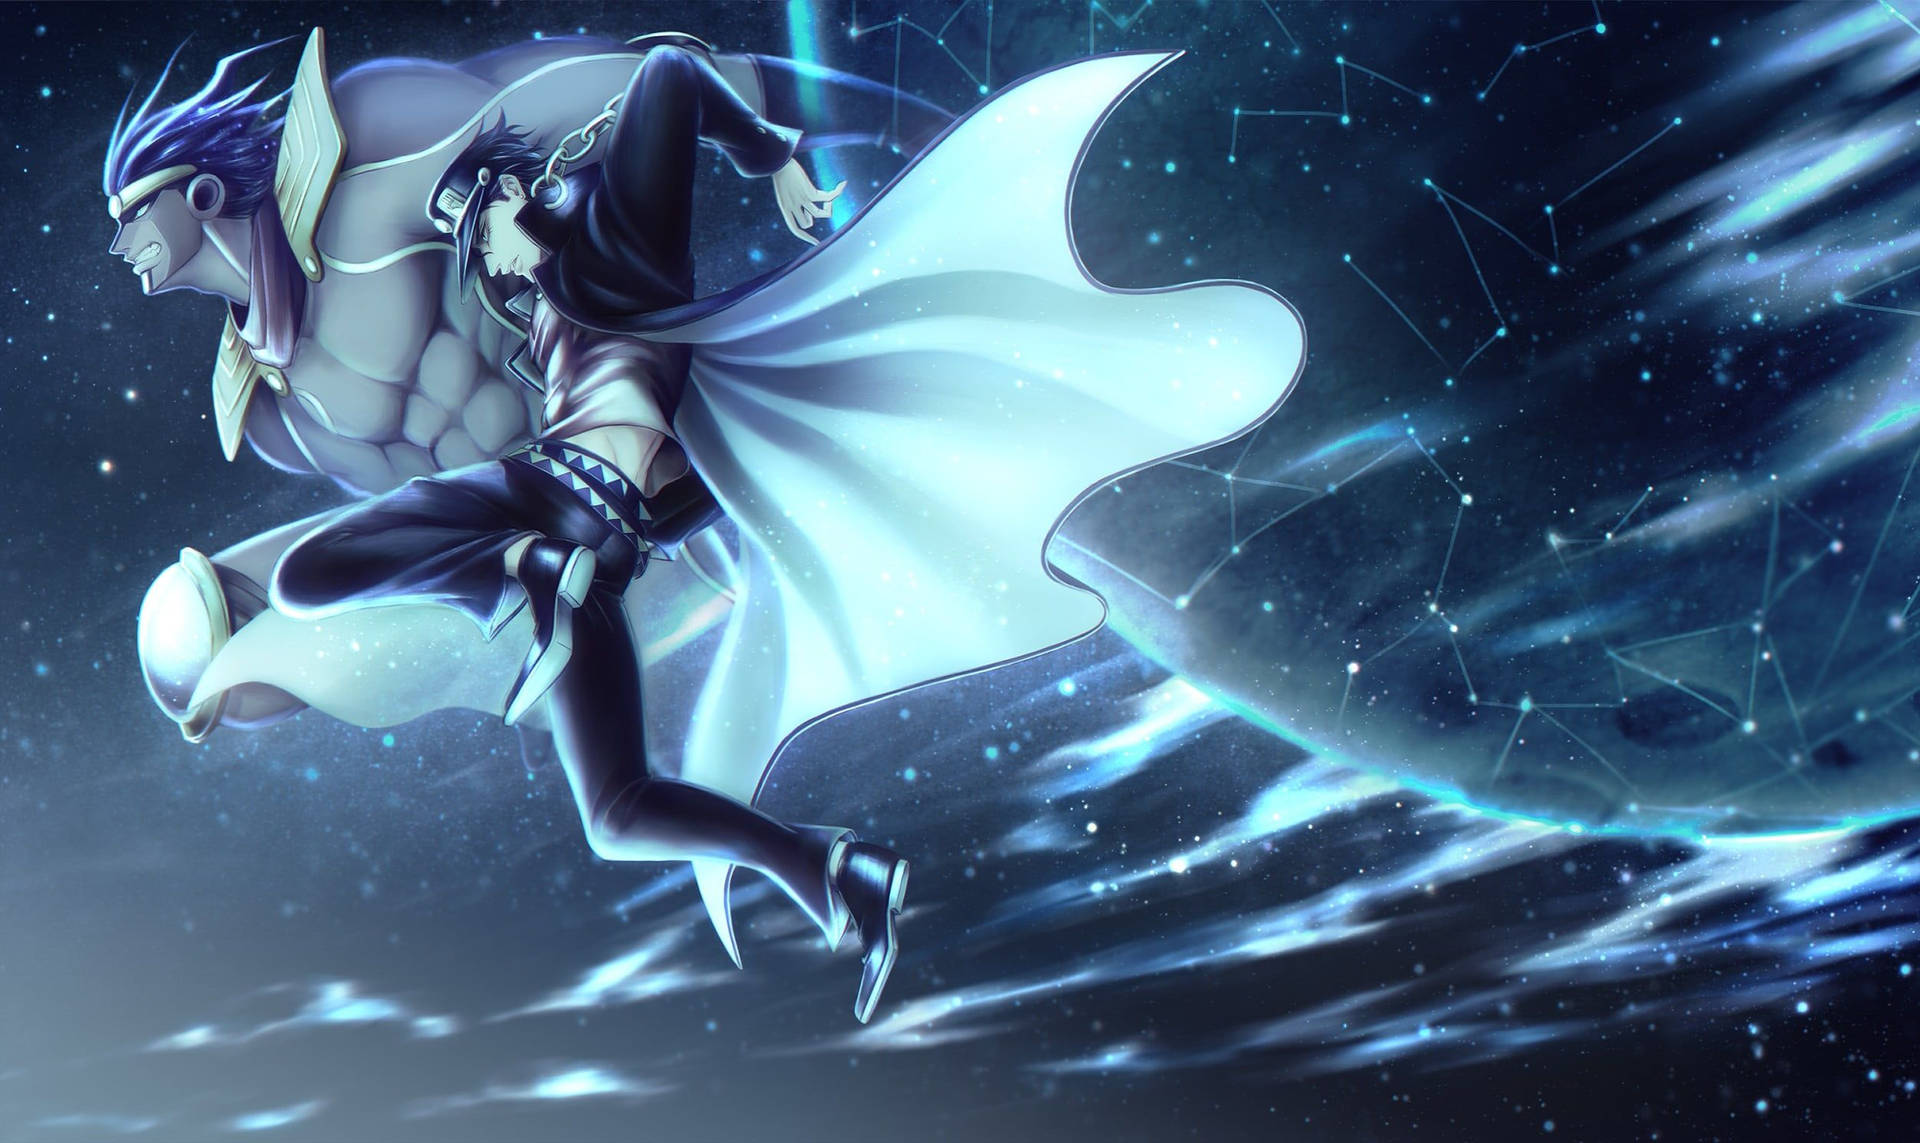 Jotaro Kujo harnessing the power of Star Platinum to vanquish evil! Wallpaper